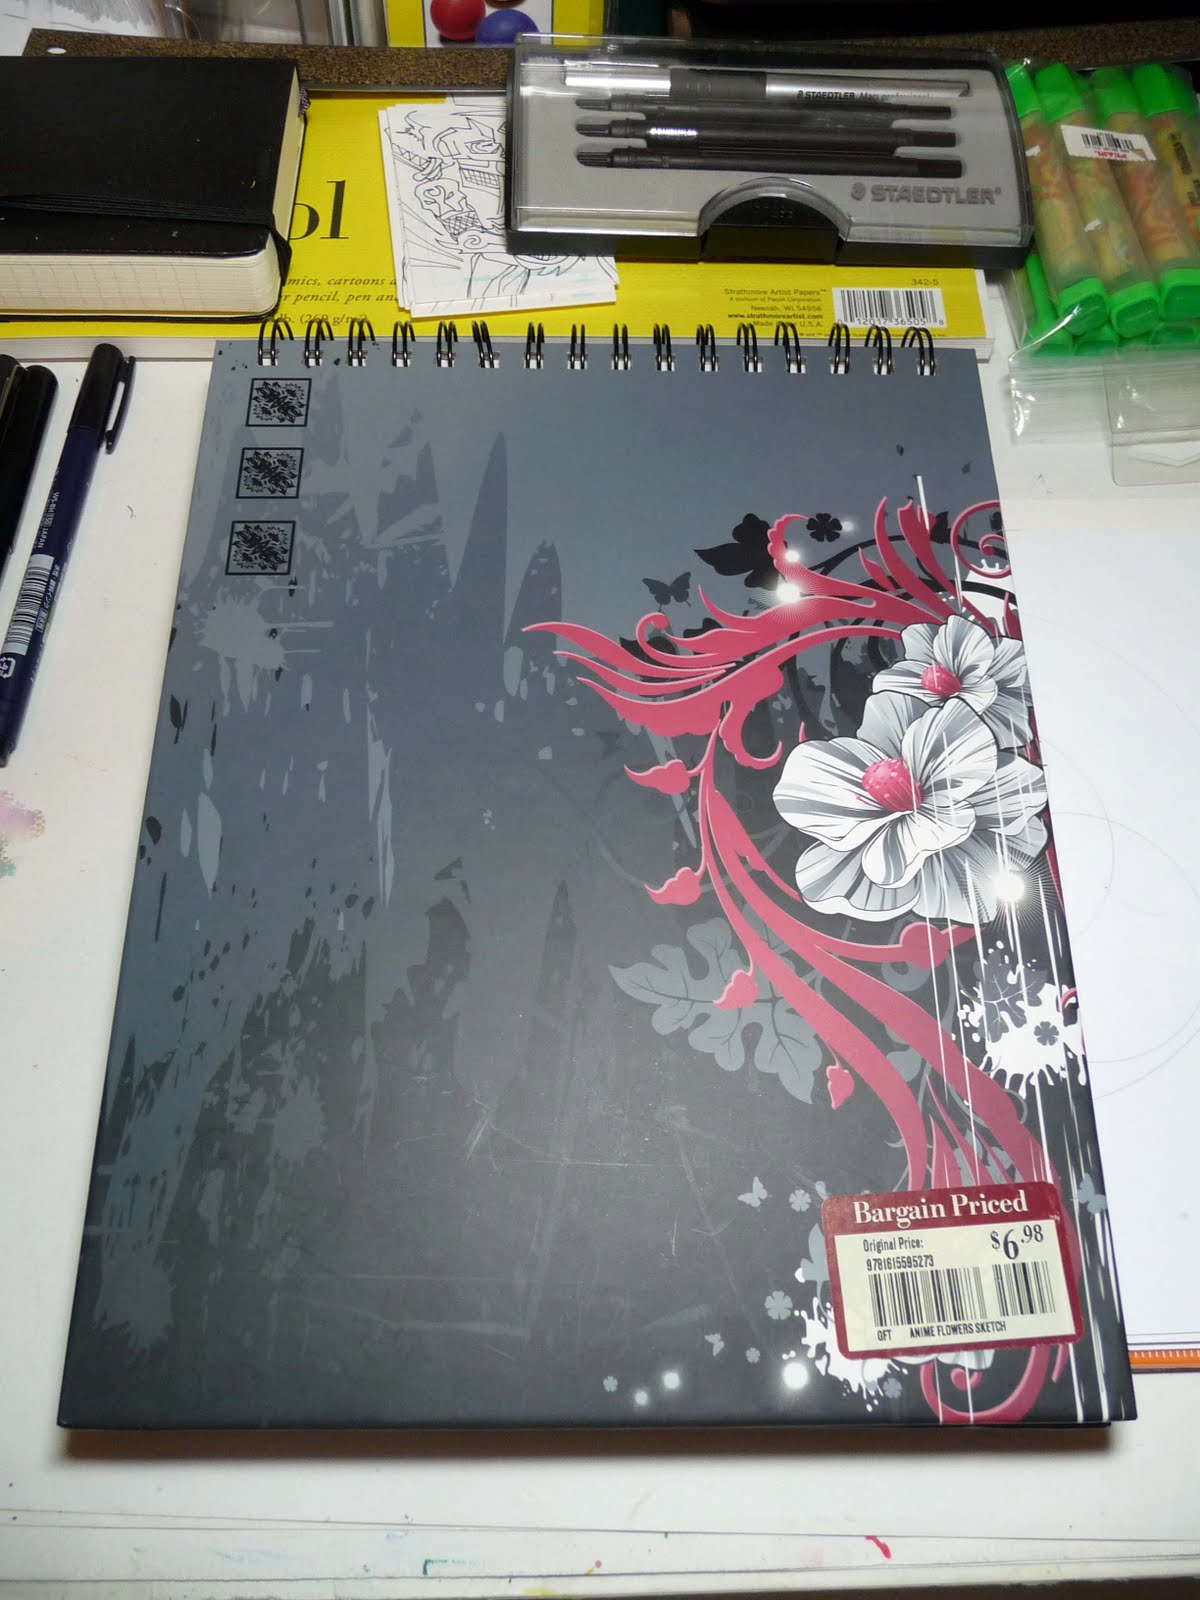 Anime Sketchbook: My Hero Academia Sketchbook ,Unique Anime Sketchbook with Blank Paper for Drawing, Doodling Or Sketching